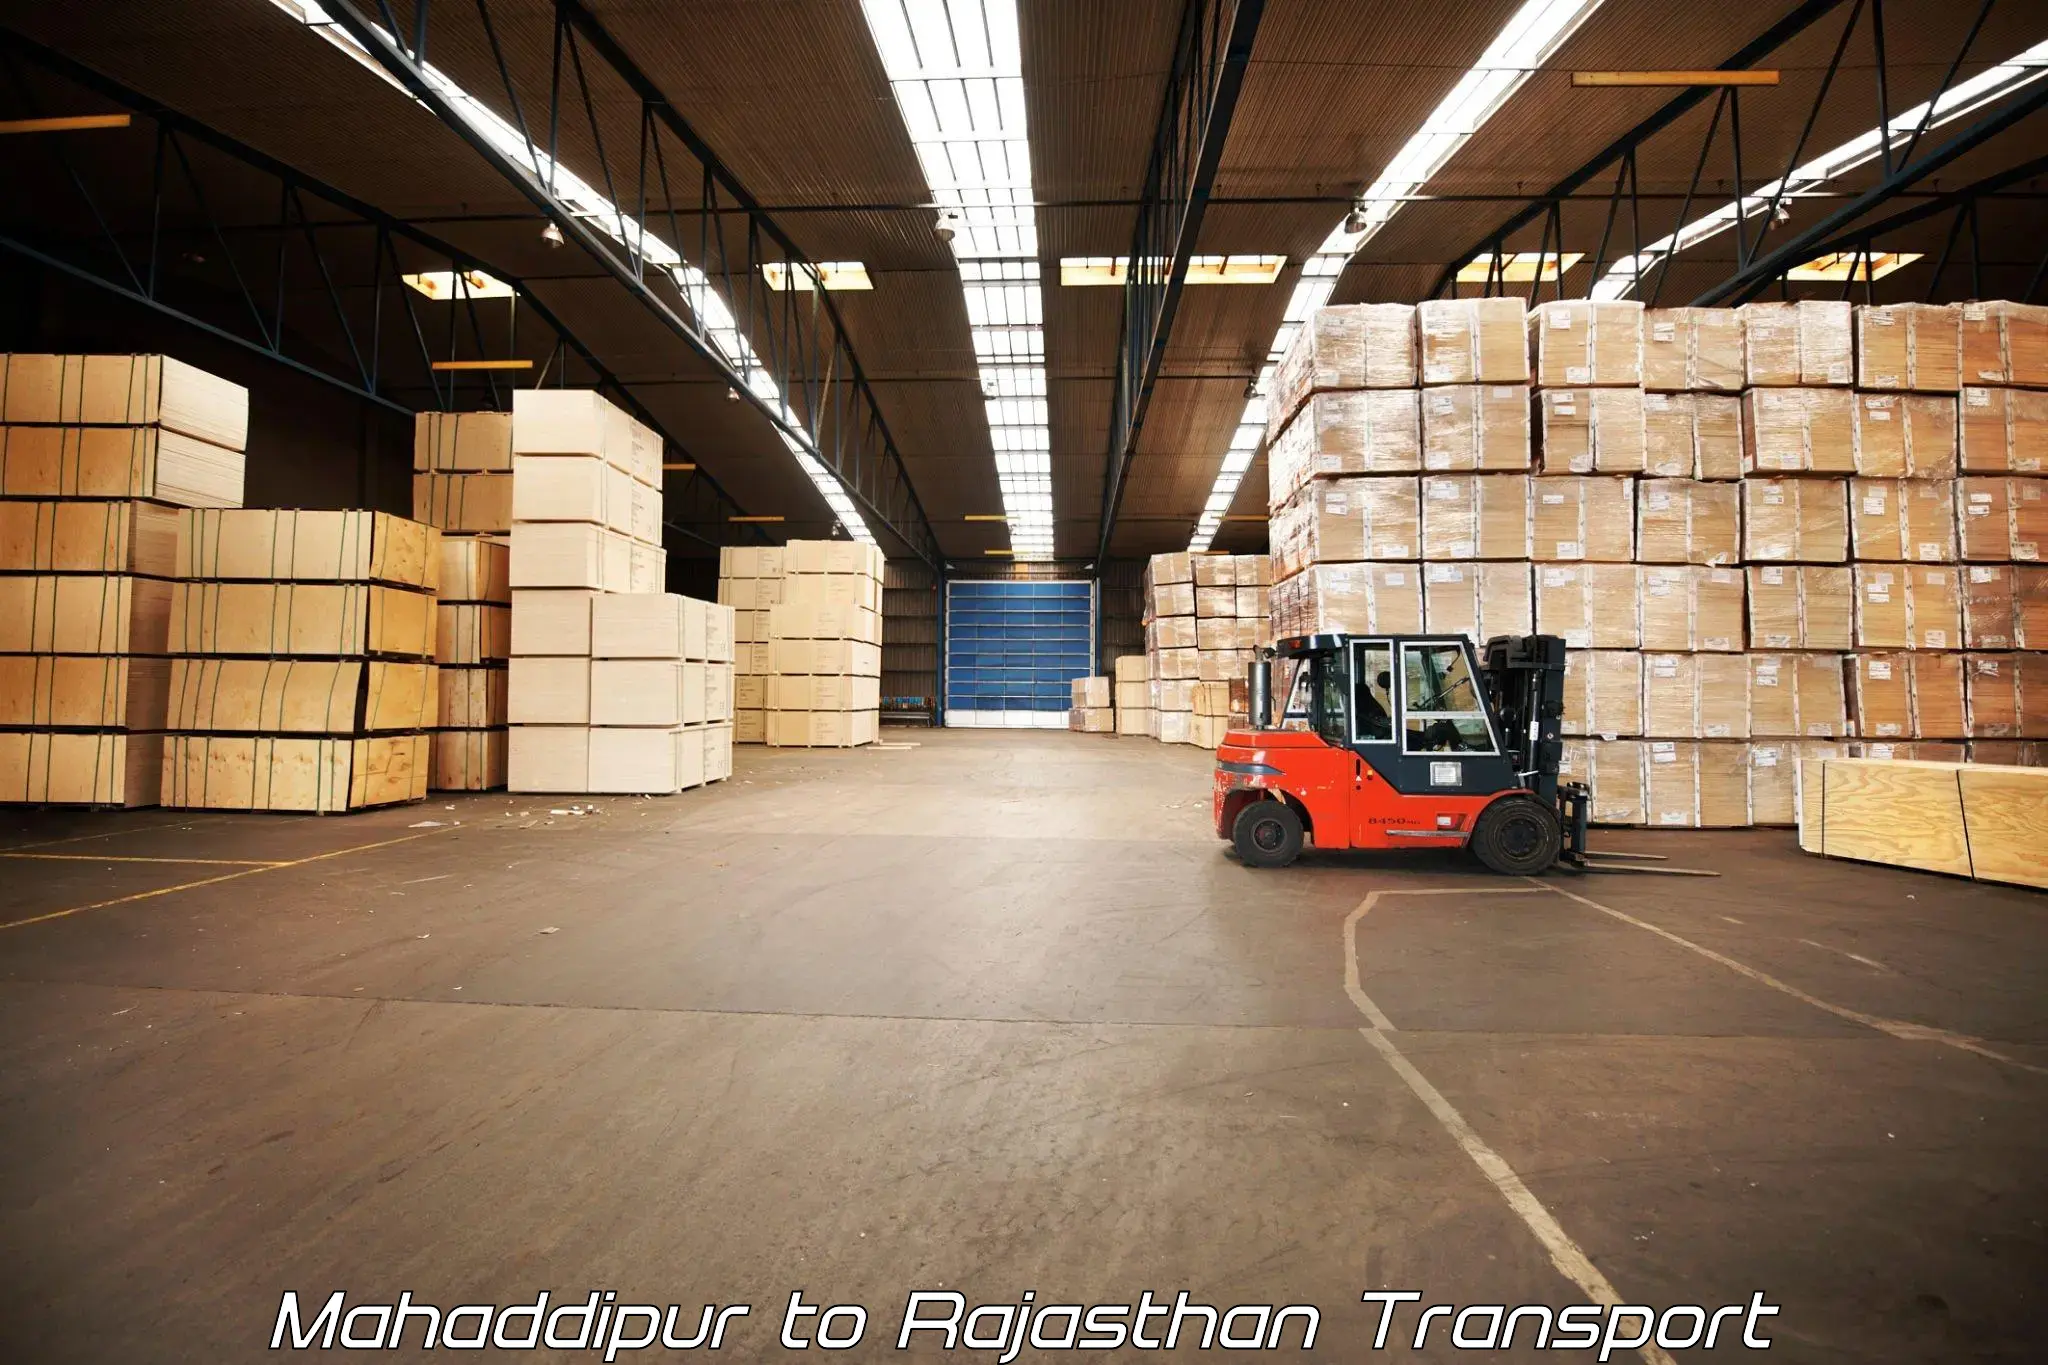 Shipping partner Mahaddipur to Sawai Madhopur